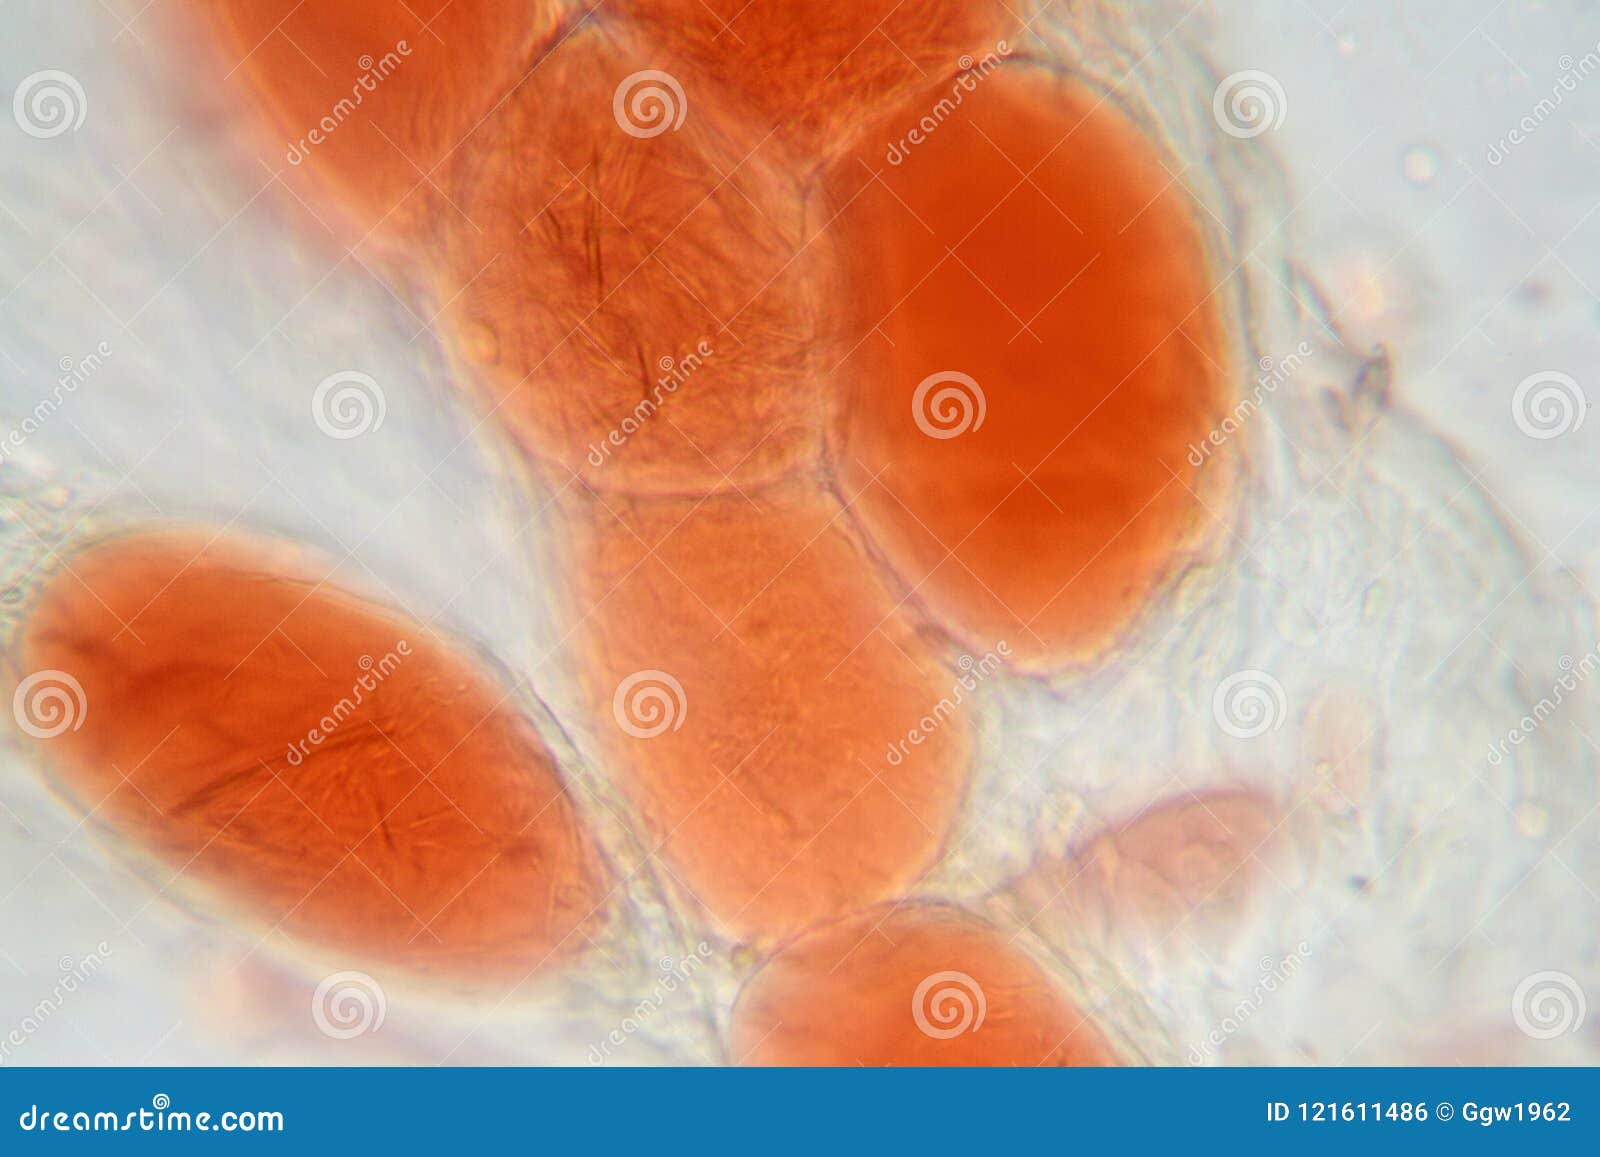 human adipose tissue